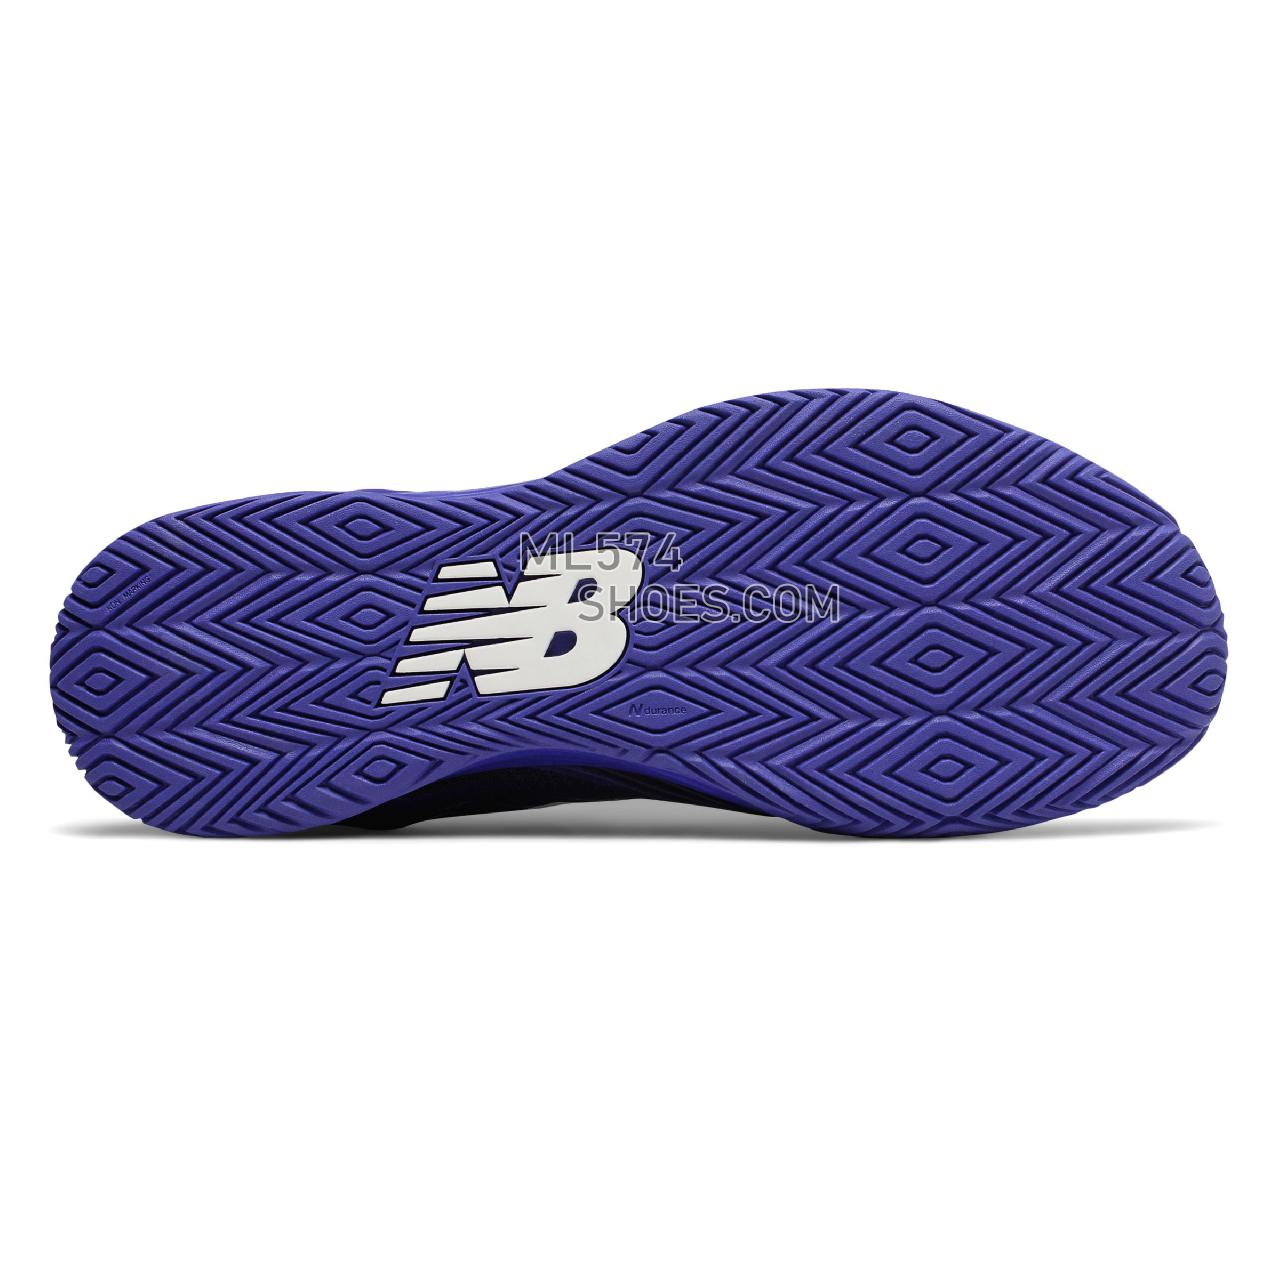 New Balance Fresh Foam Lav - Men's Tennis - Pigment with UV Blue - MCHLAVUV